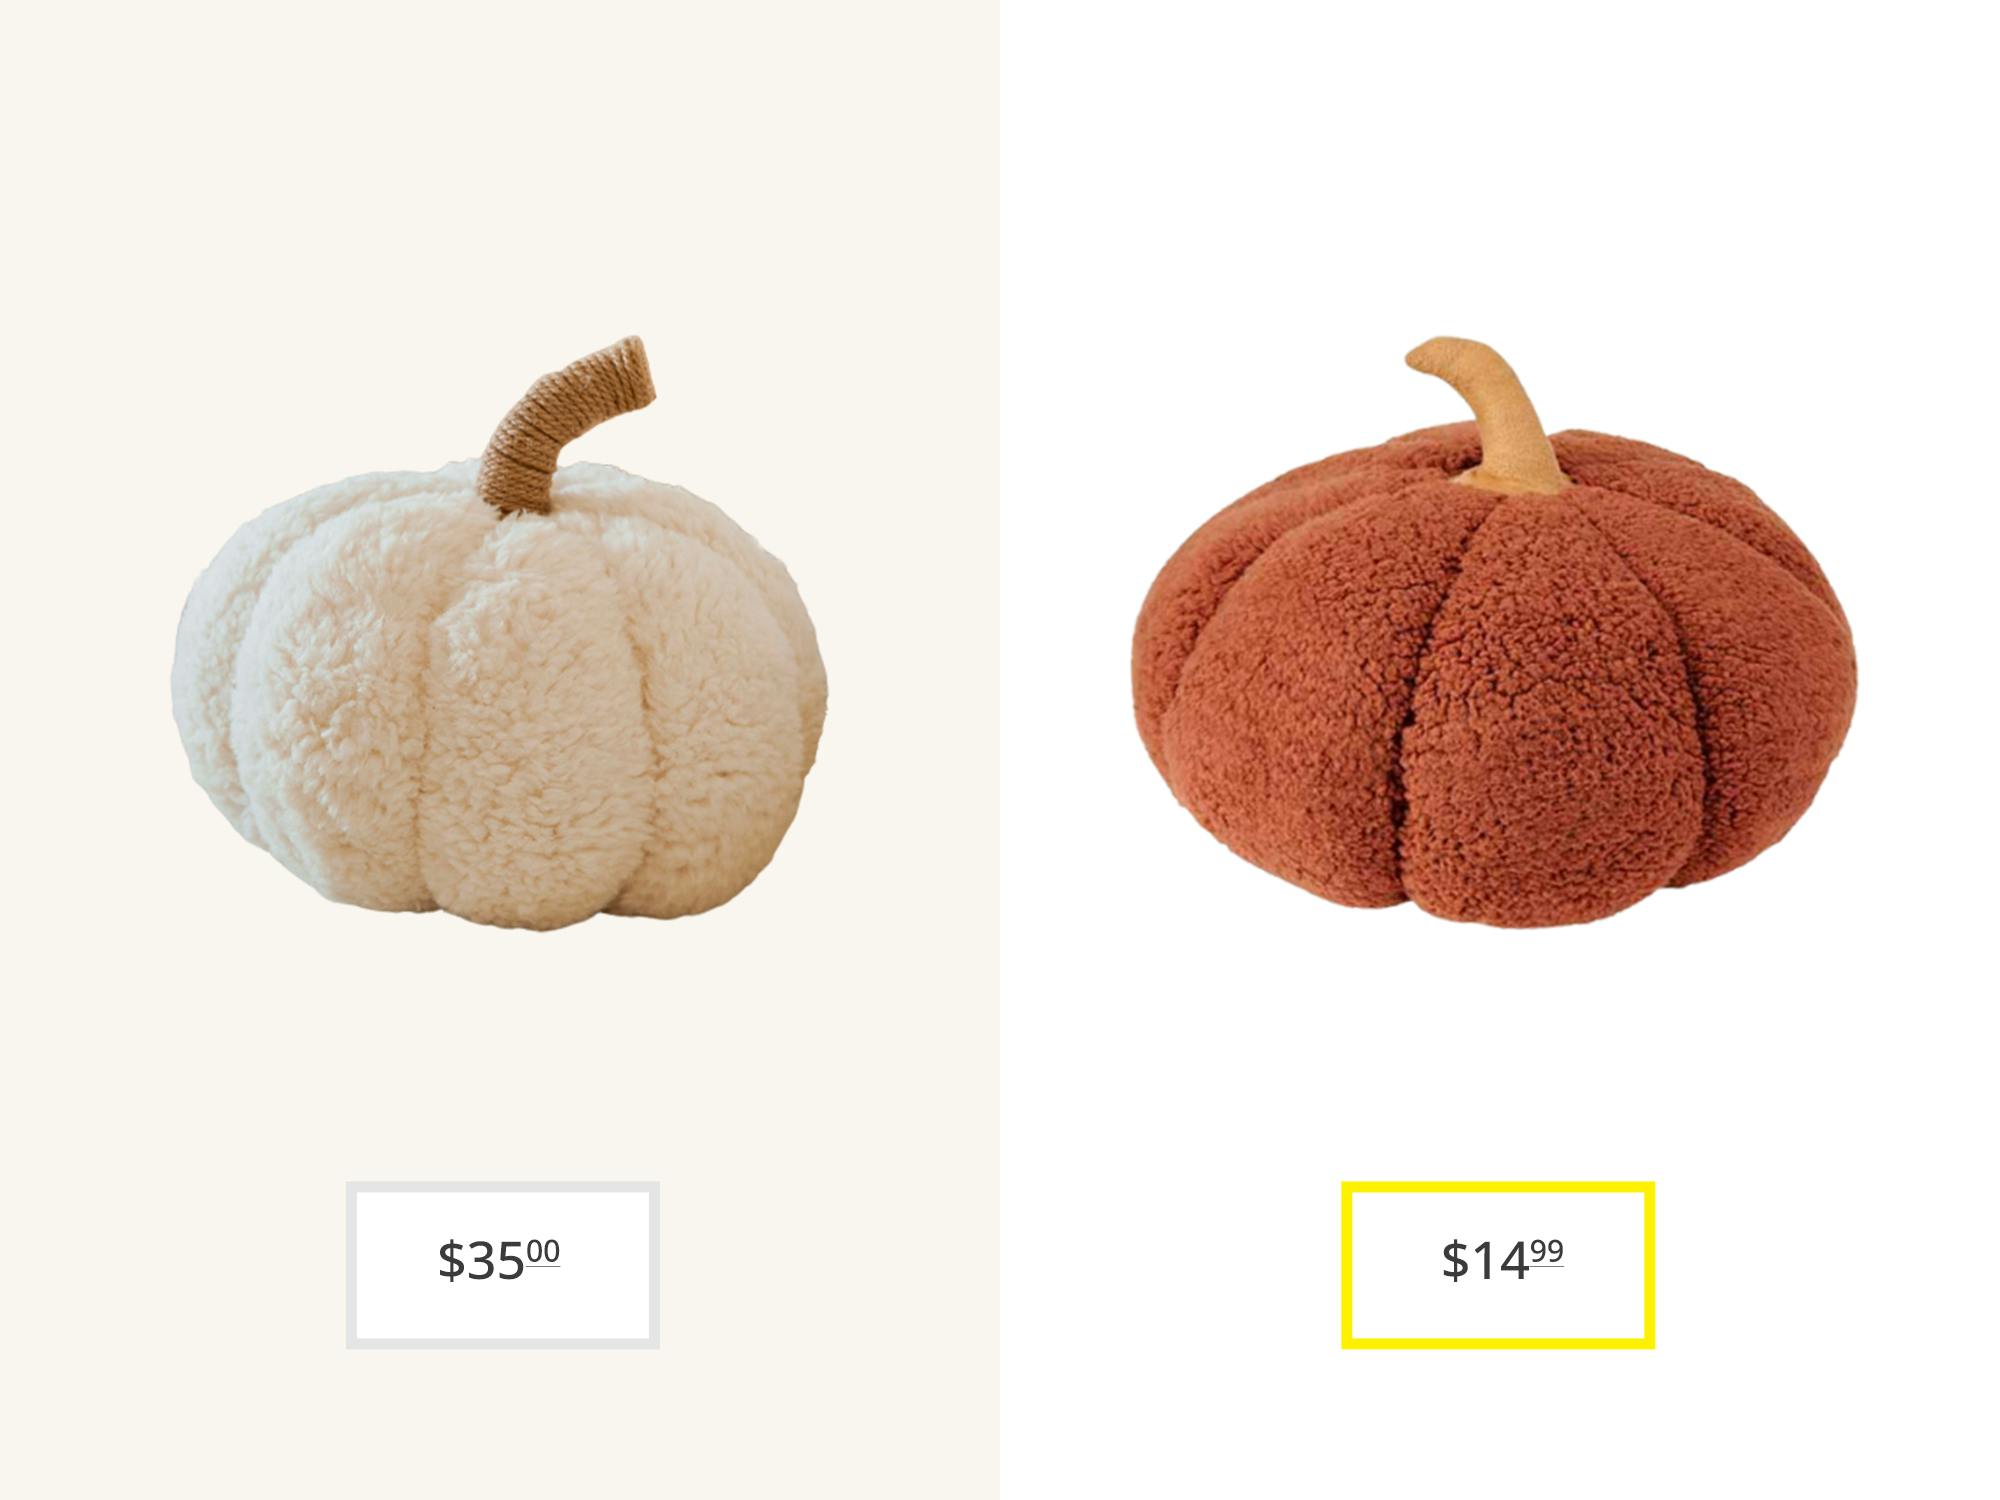 A sherpa pumpkin from Pottery barn and a sherpa pumpkin from Aldi